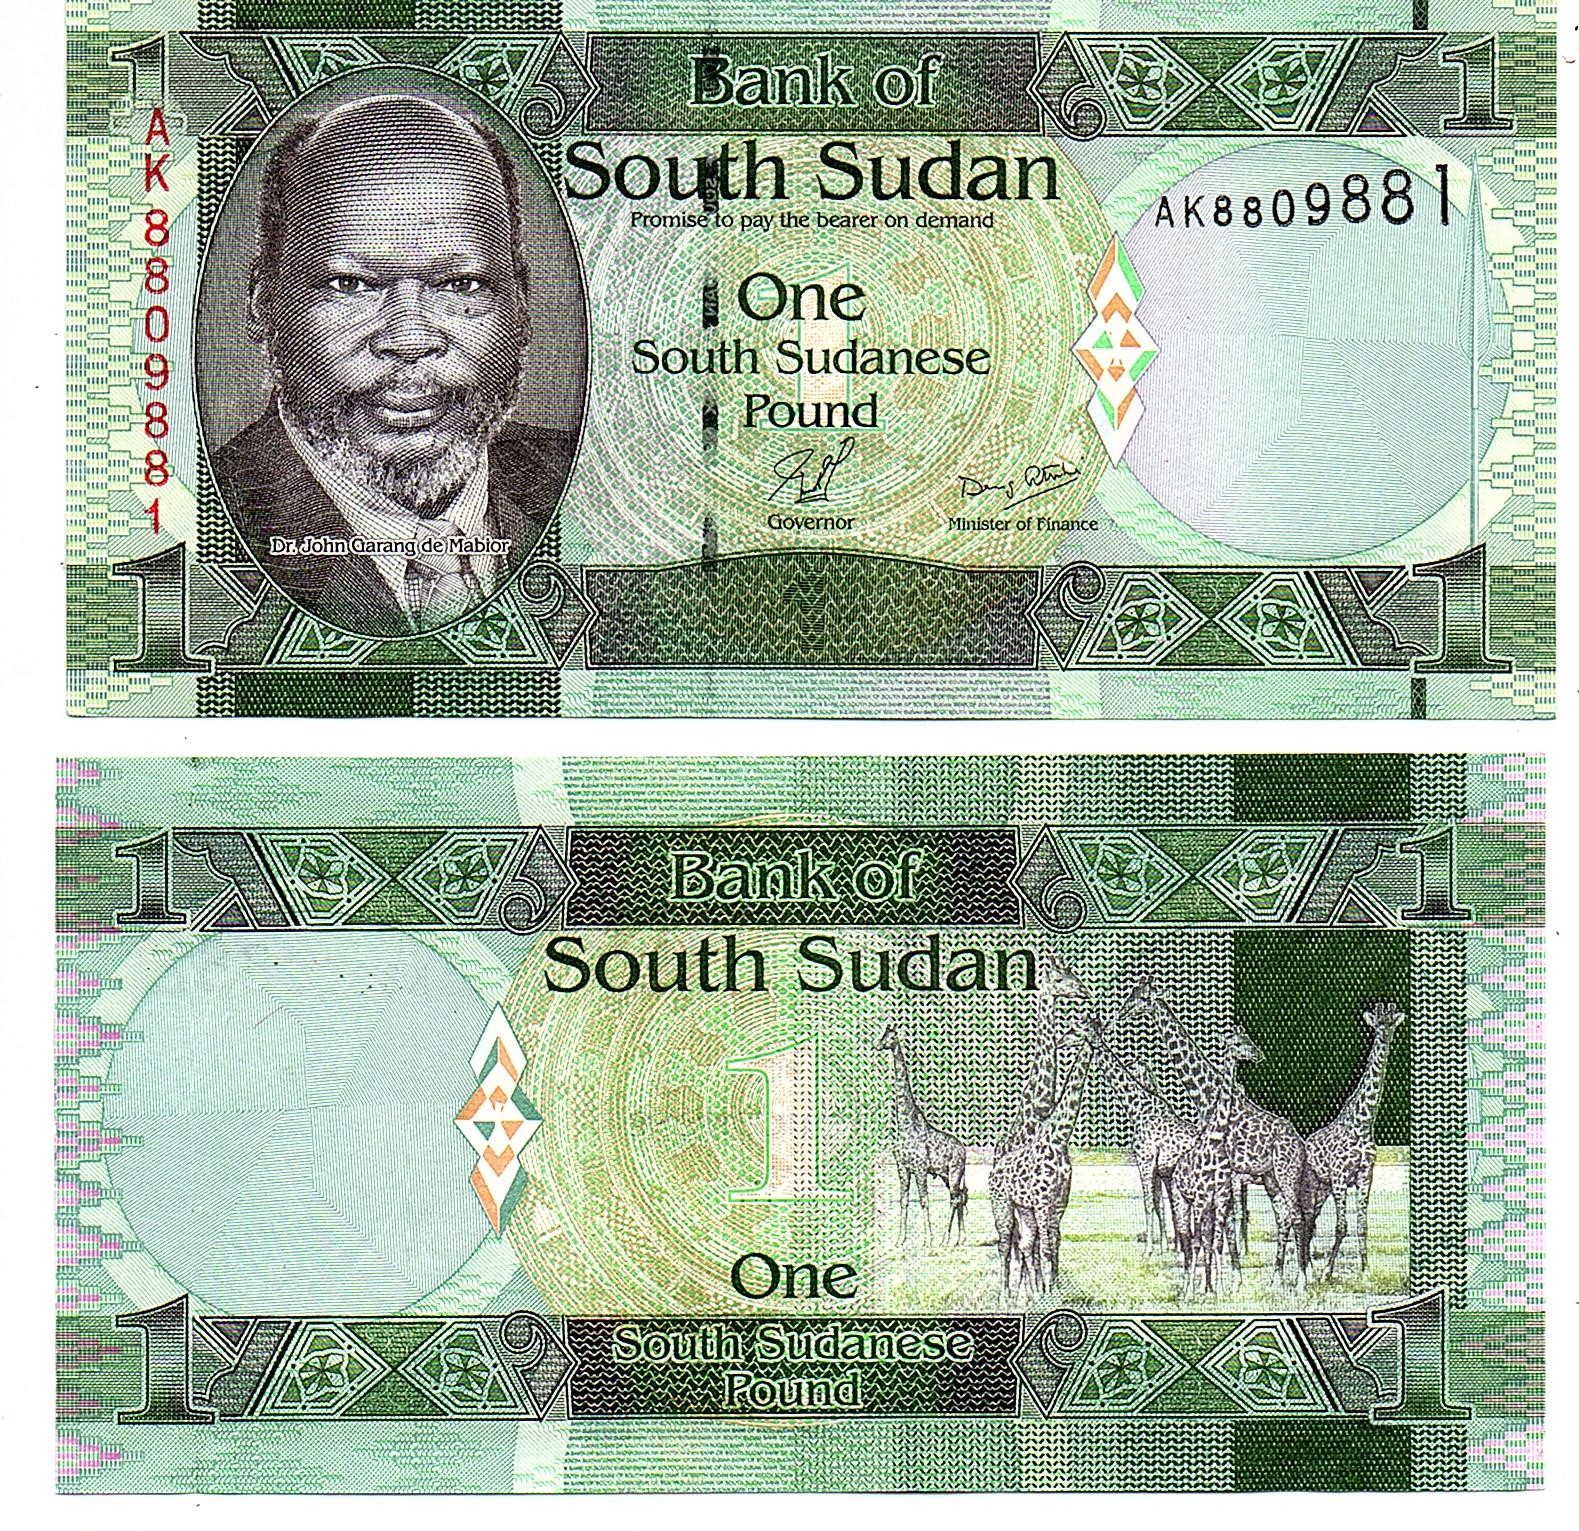 South-Sudan #5 1 South Sudanese Pound